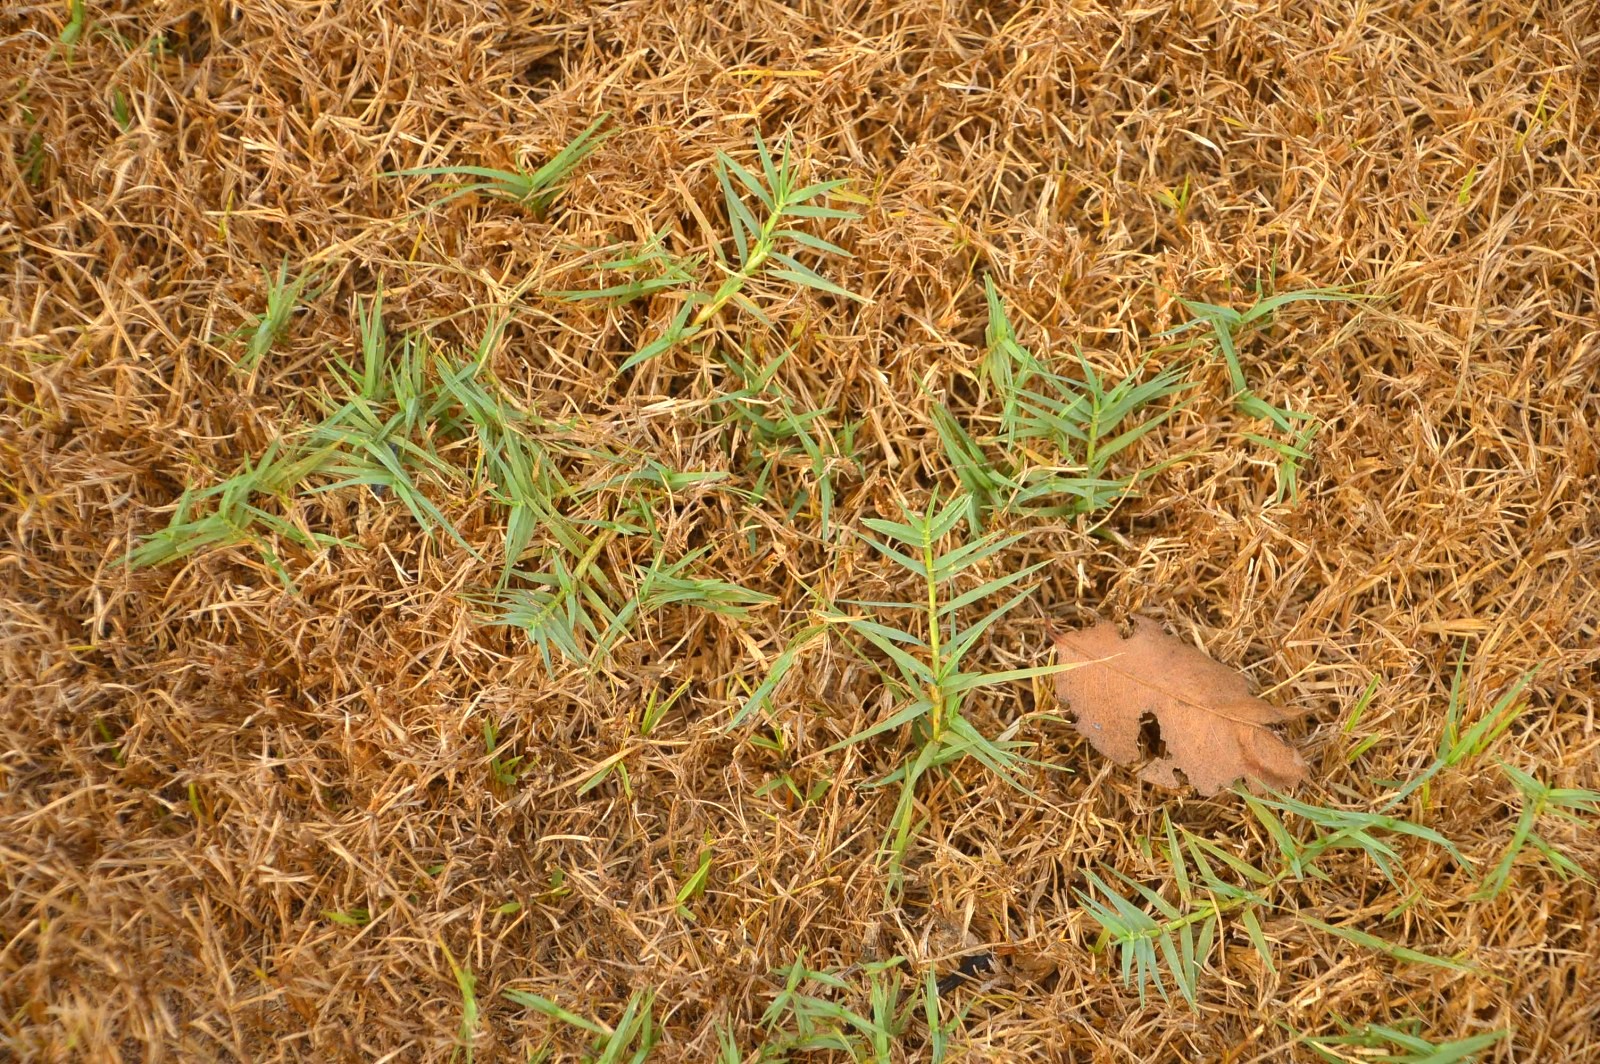 green bermudagrass in a sward of dormant manilagrass